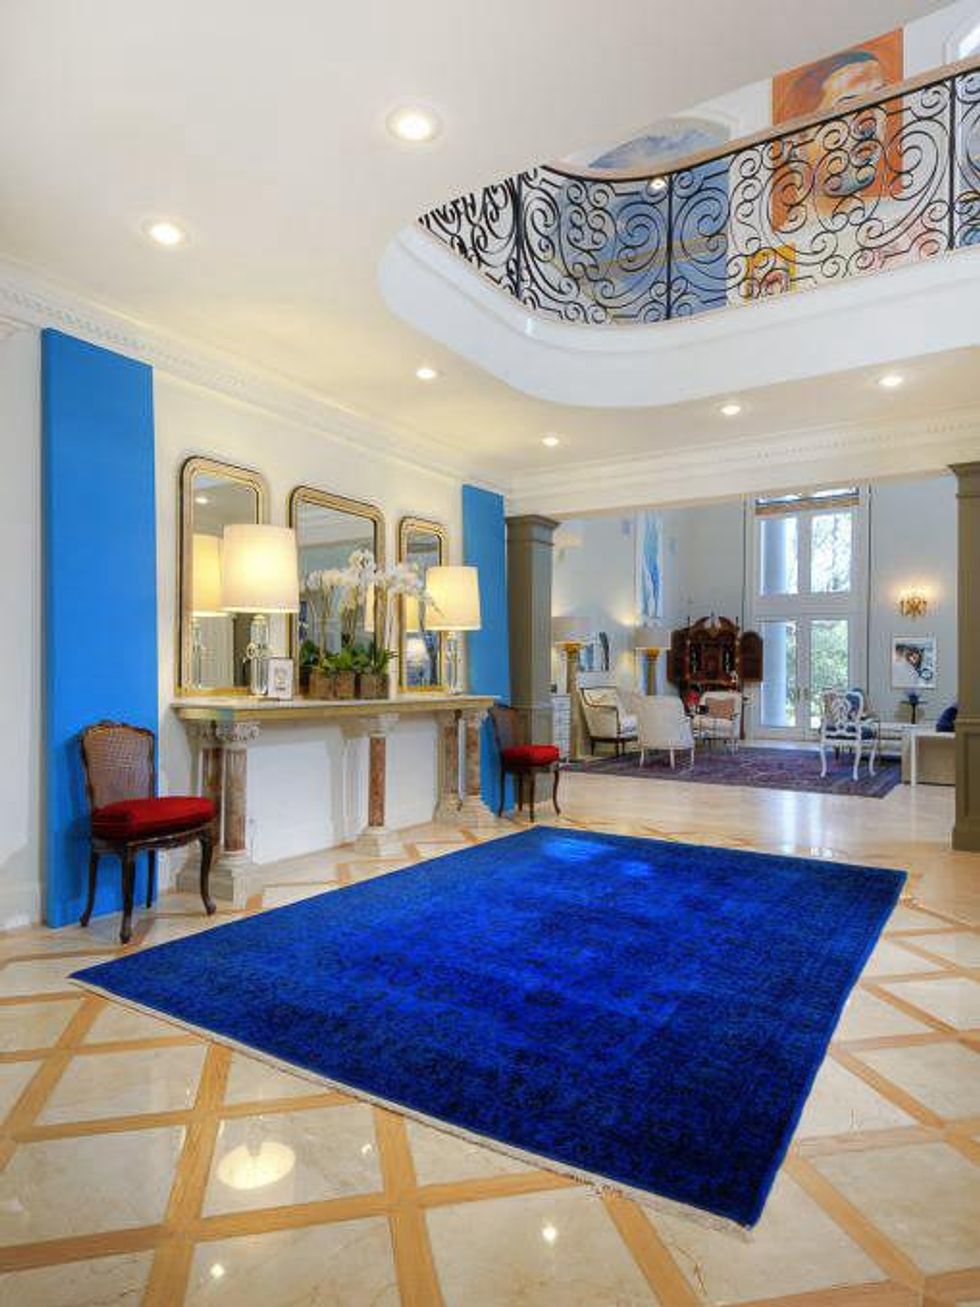 Abrahams Rugs neon blue rug in contemporary home in Memorial area